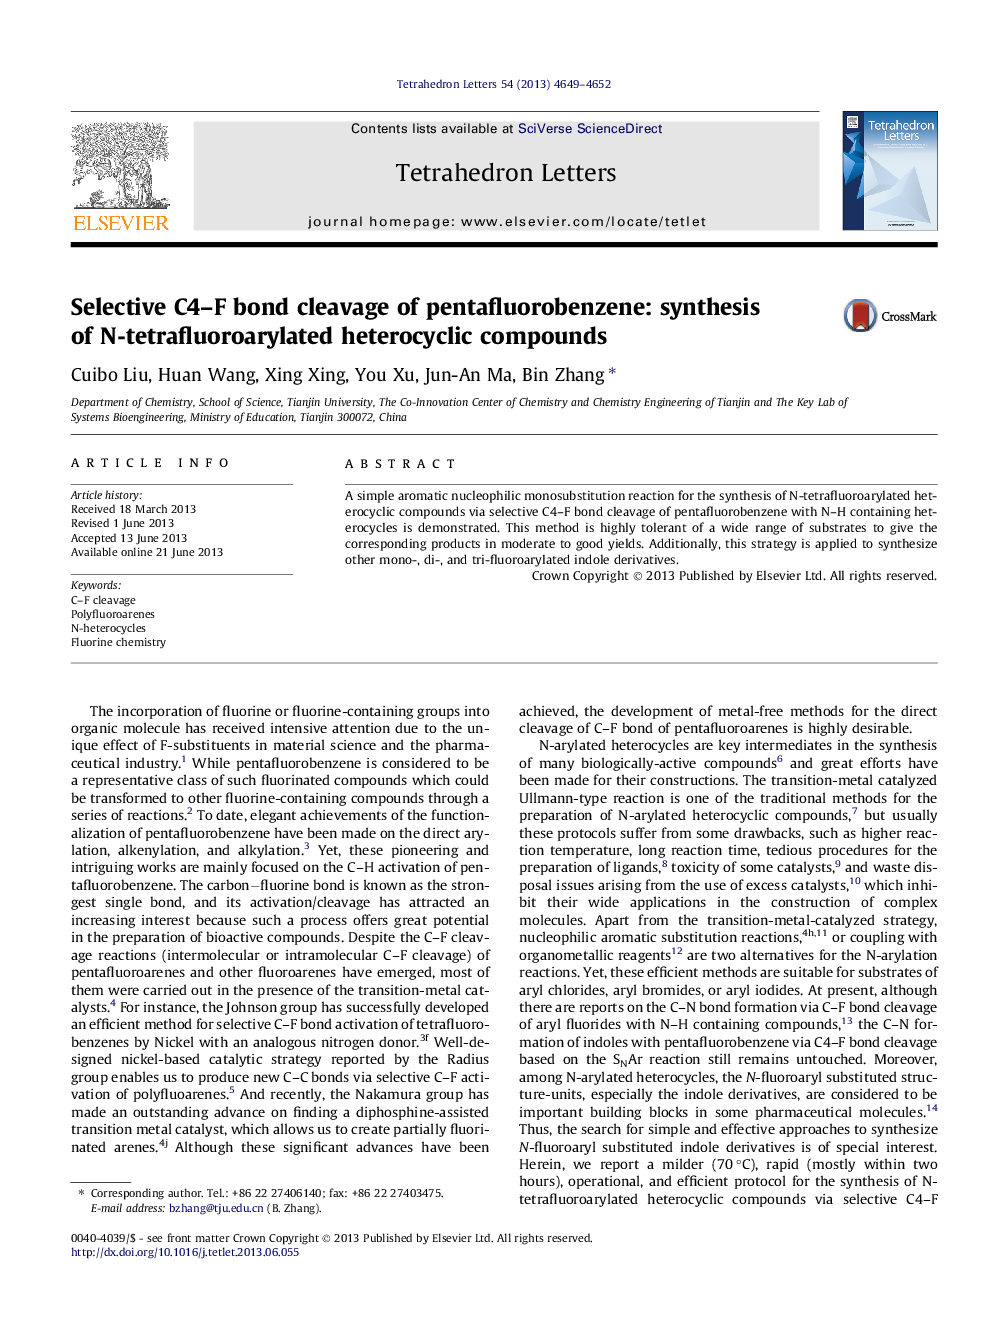 Selective C4-F bond cleavage of pentafluorobenzene: synthesis of N-tetrafluoroarylated heterocyclic compounds